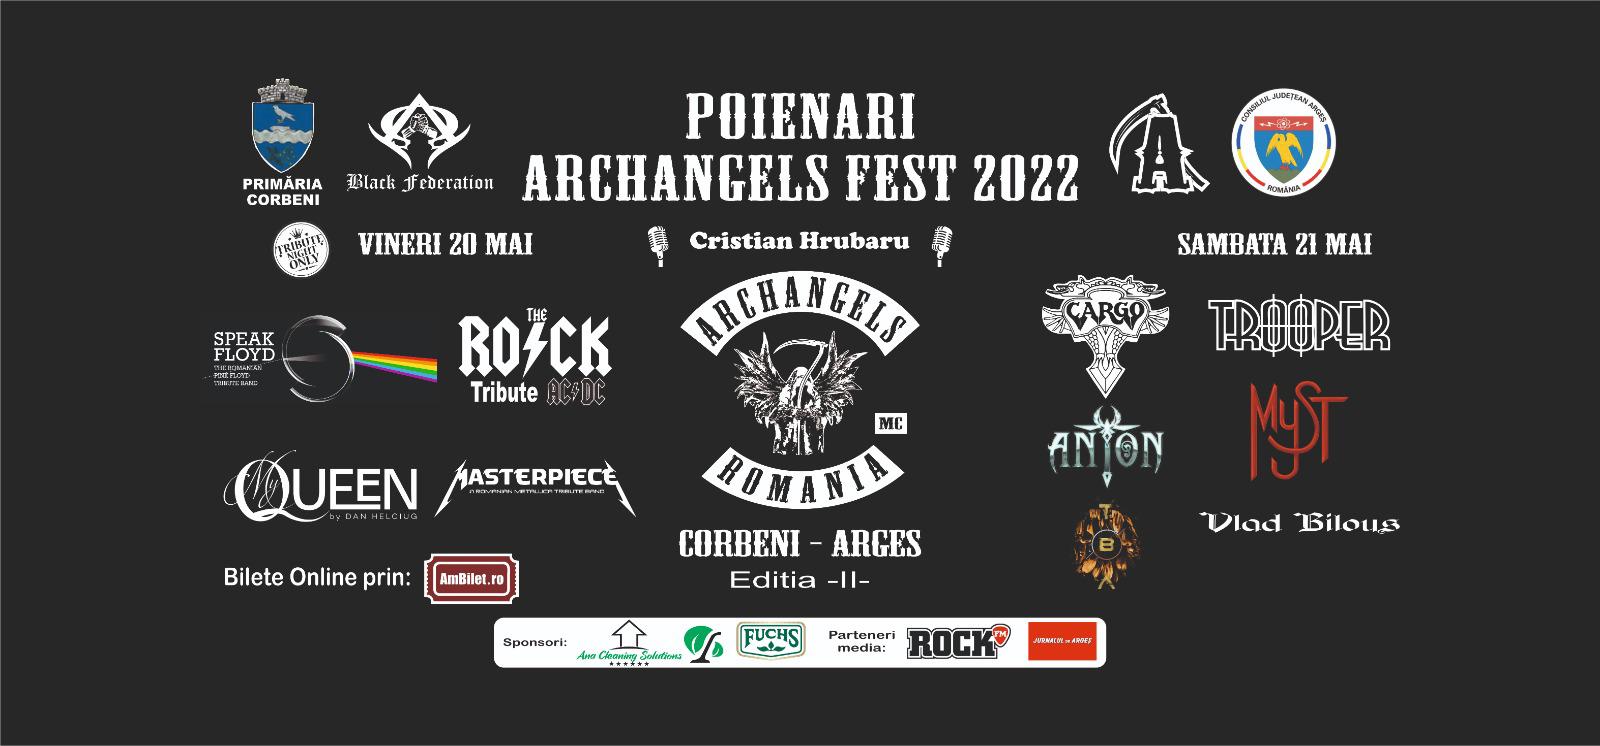 Poienari Archangels Fest 2022